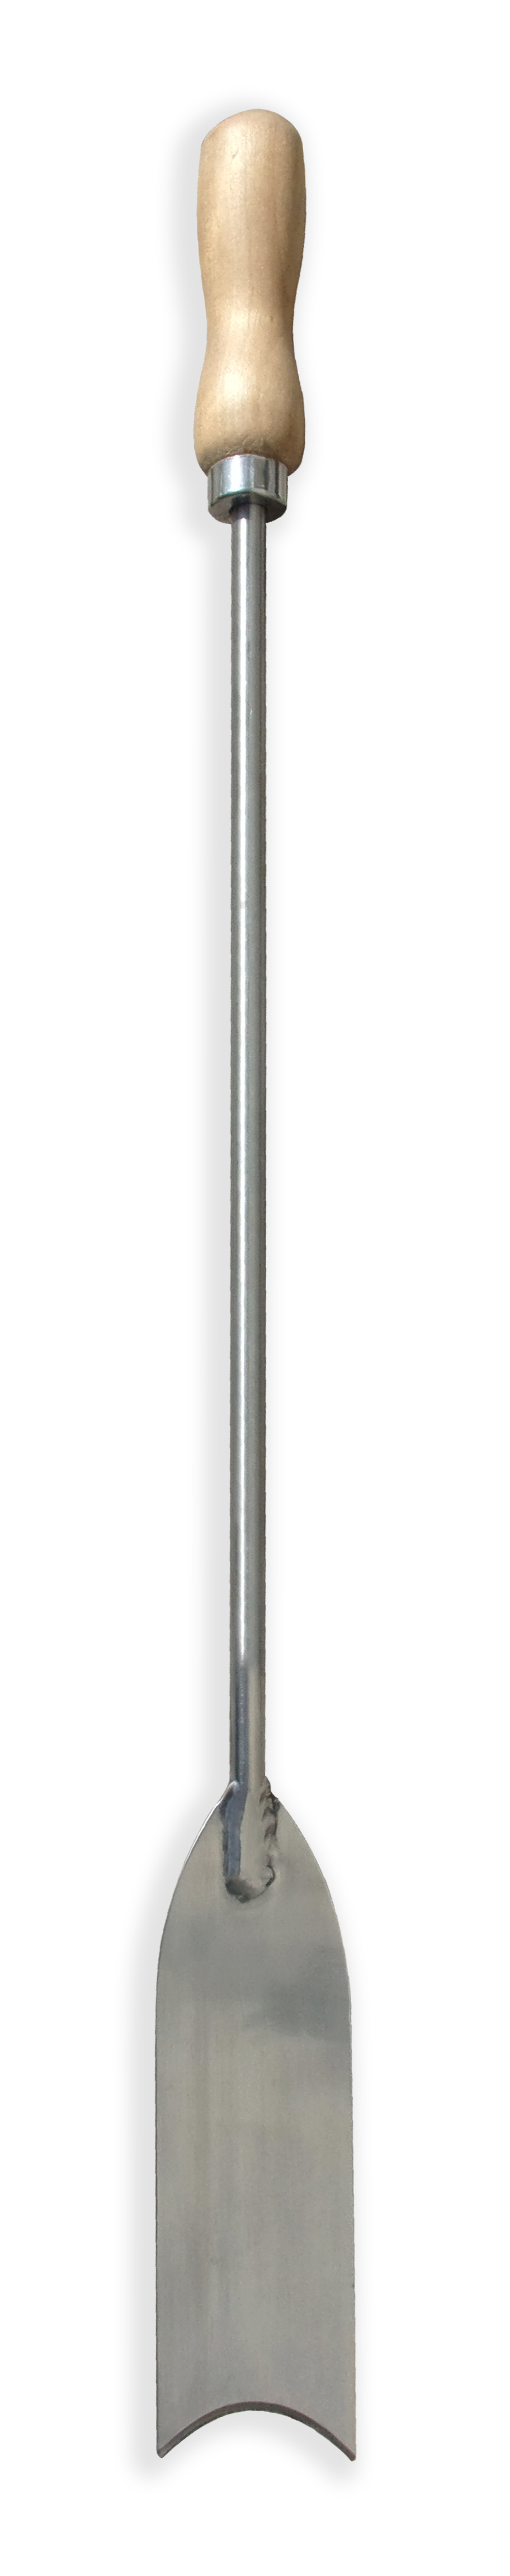 Zenport Asparagus Knife K801 Weeding Tool, 2-Inch Crescent Stainless Steel Blade, 26.5-Inch Length